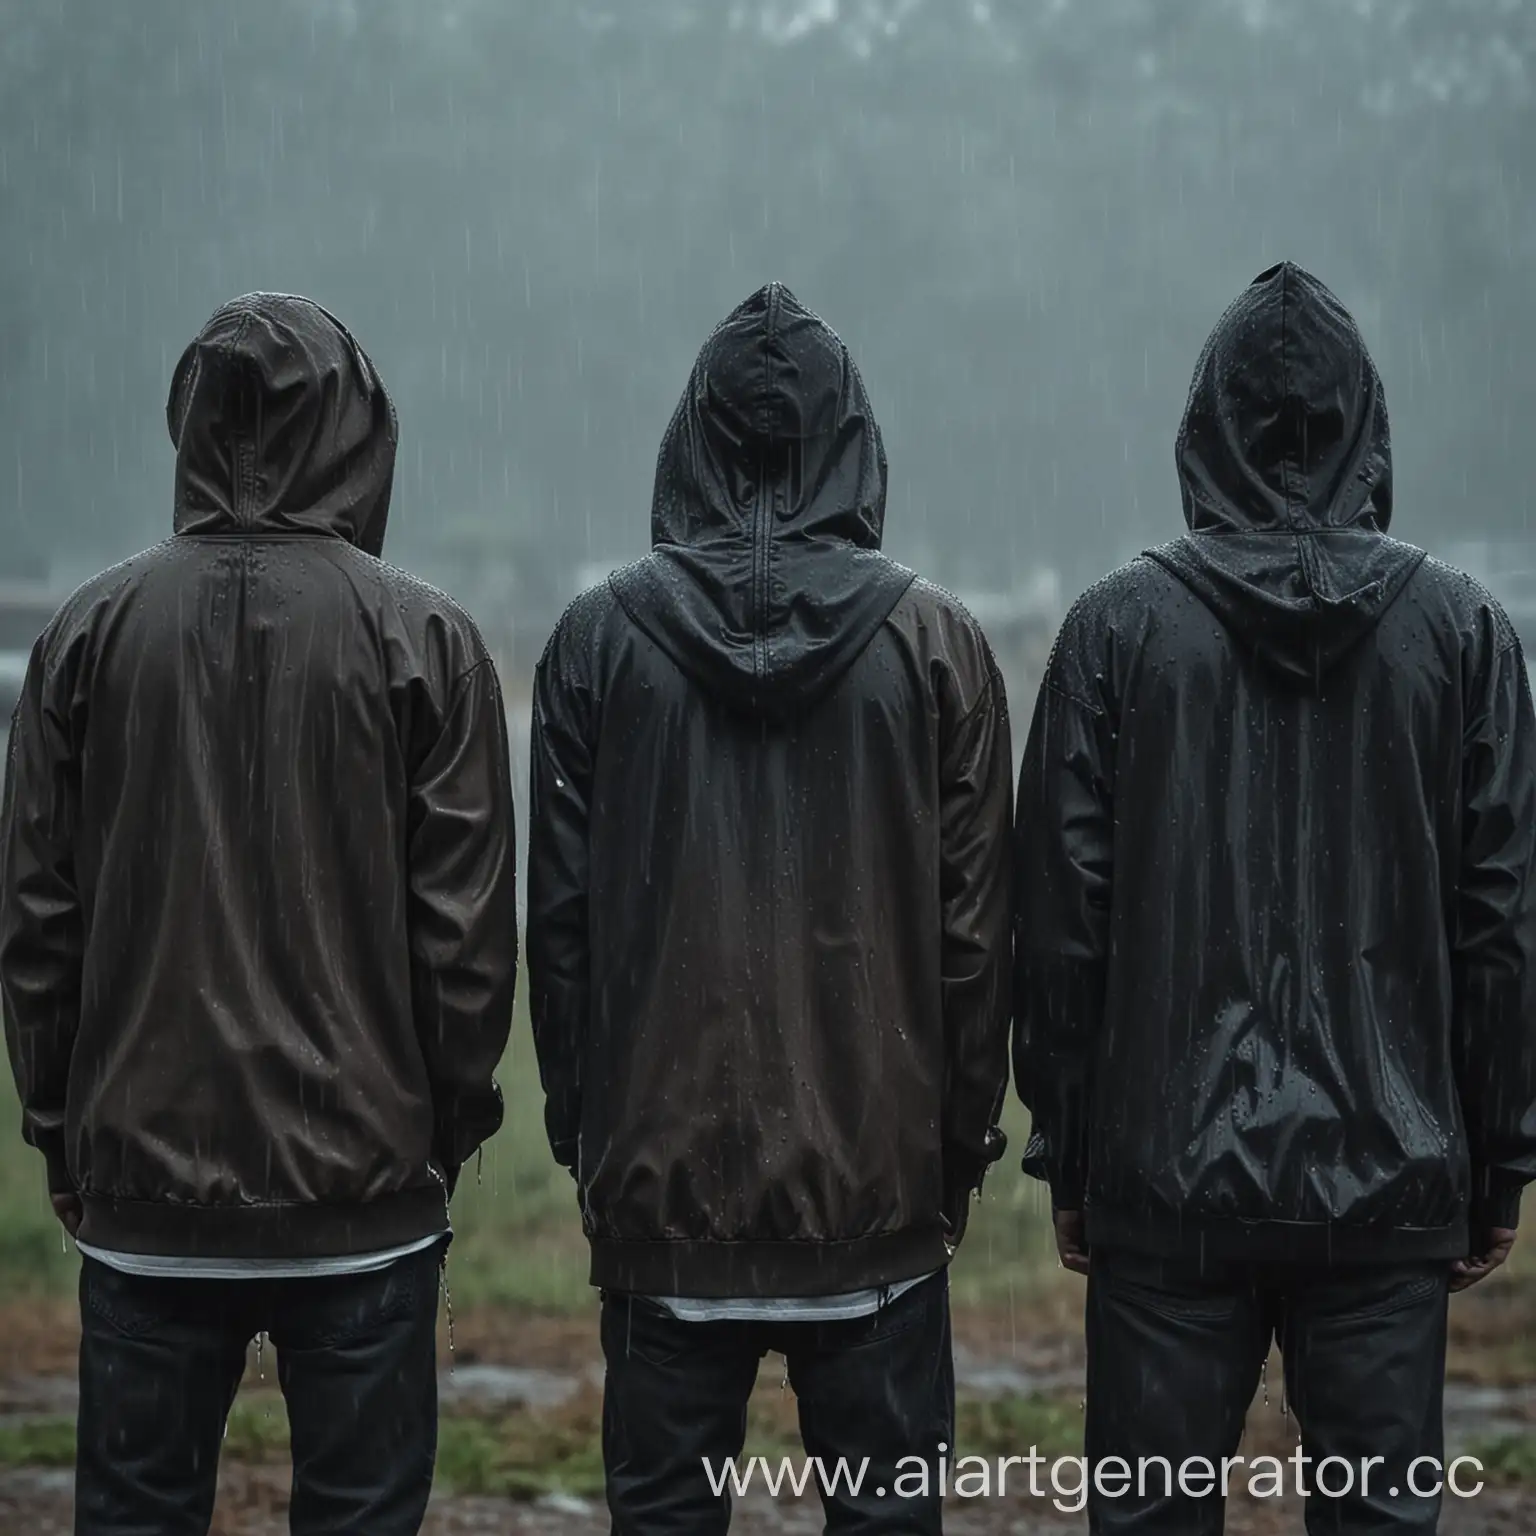 Three-Men-in-Hoodies-Standing-in-the-Rain